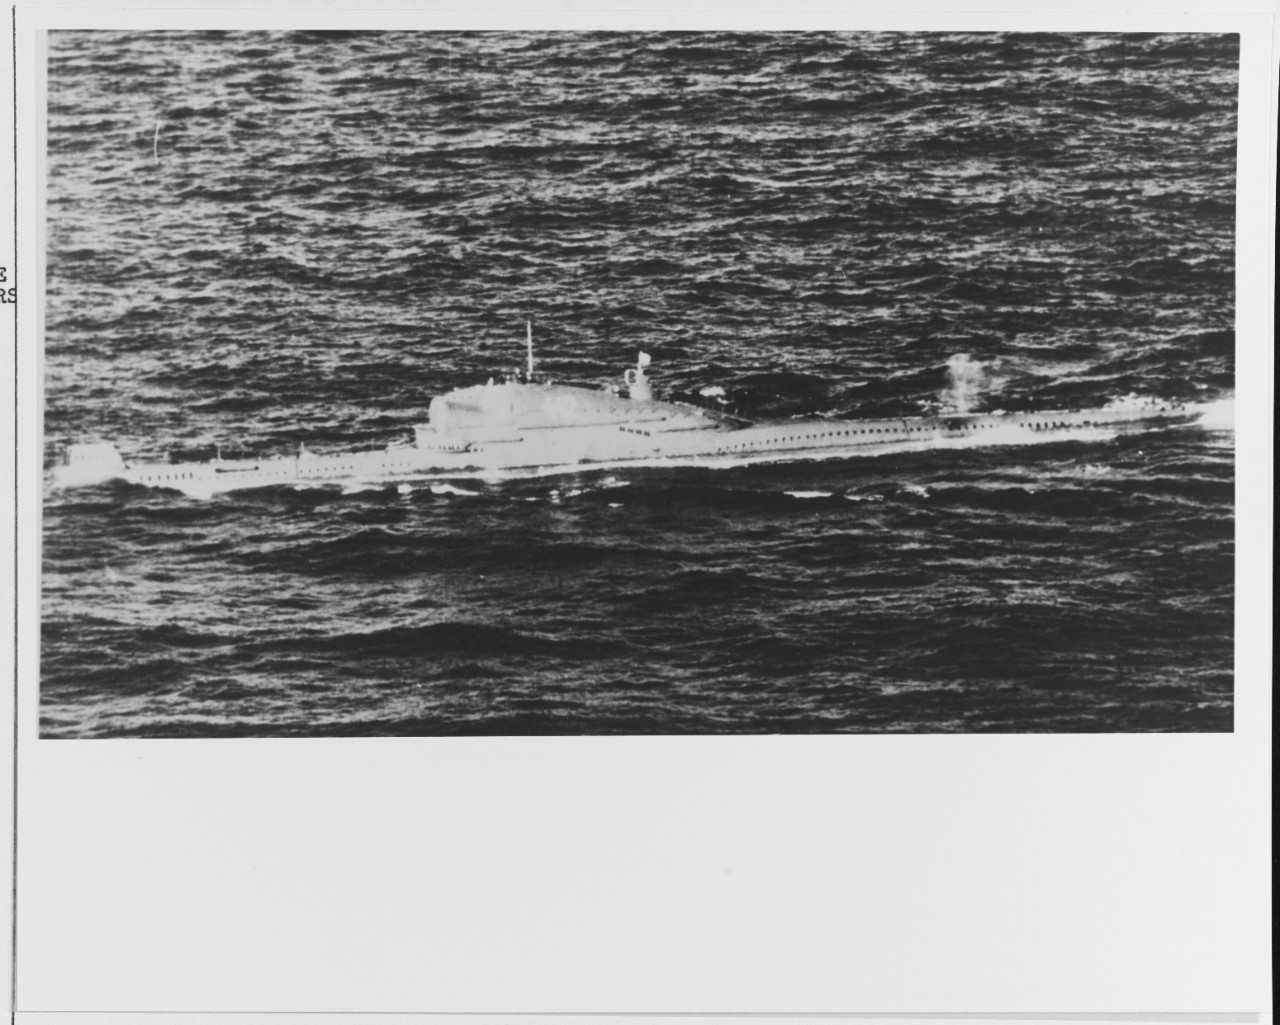 Soviet W Class Submarine